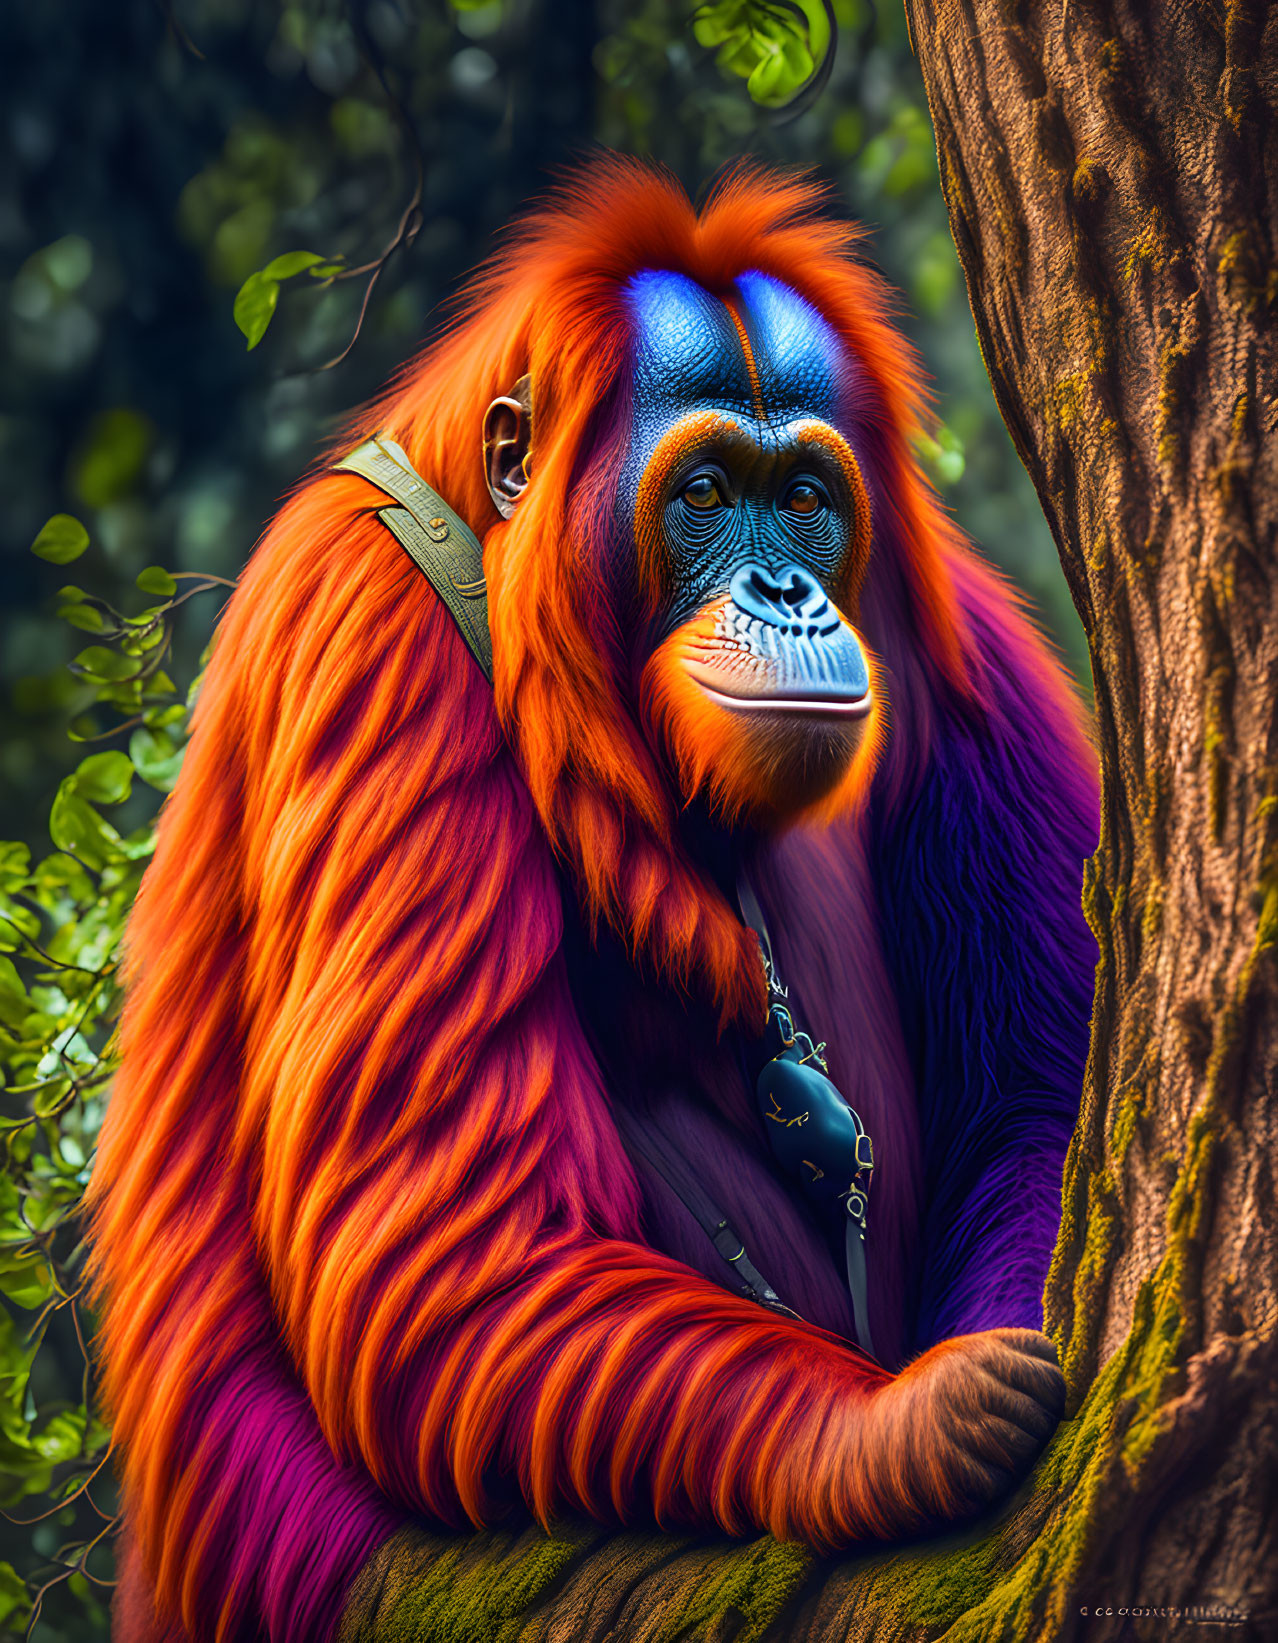 Oscar the orangutan